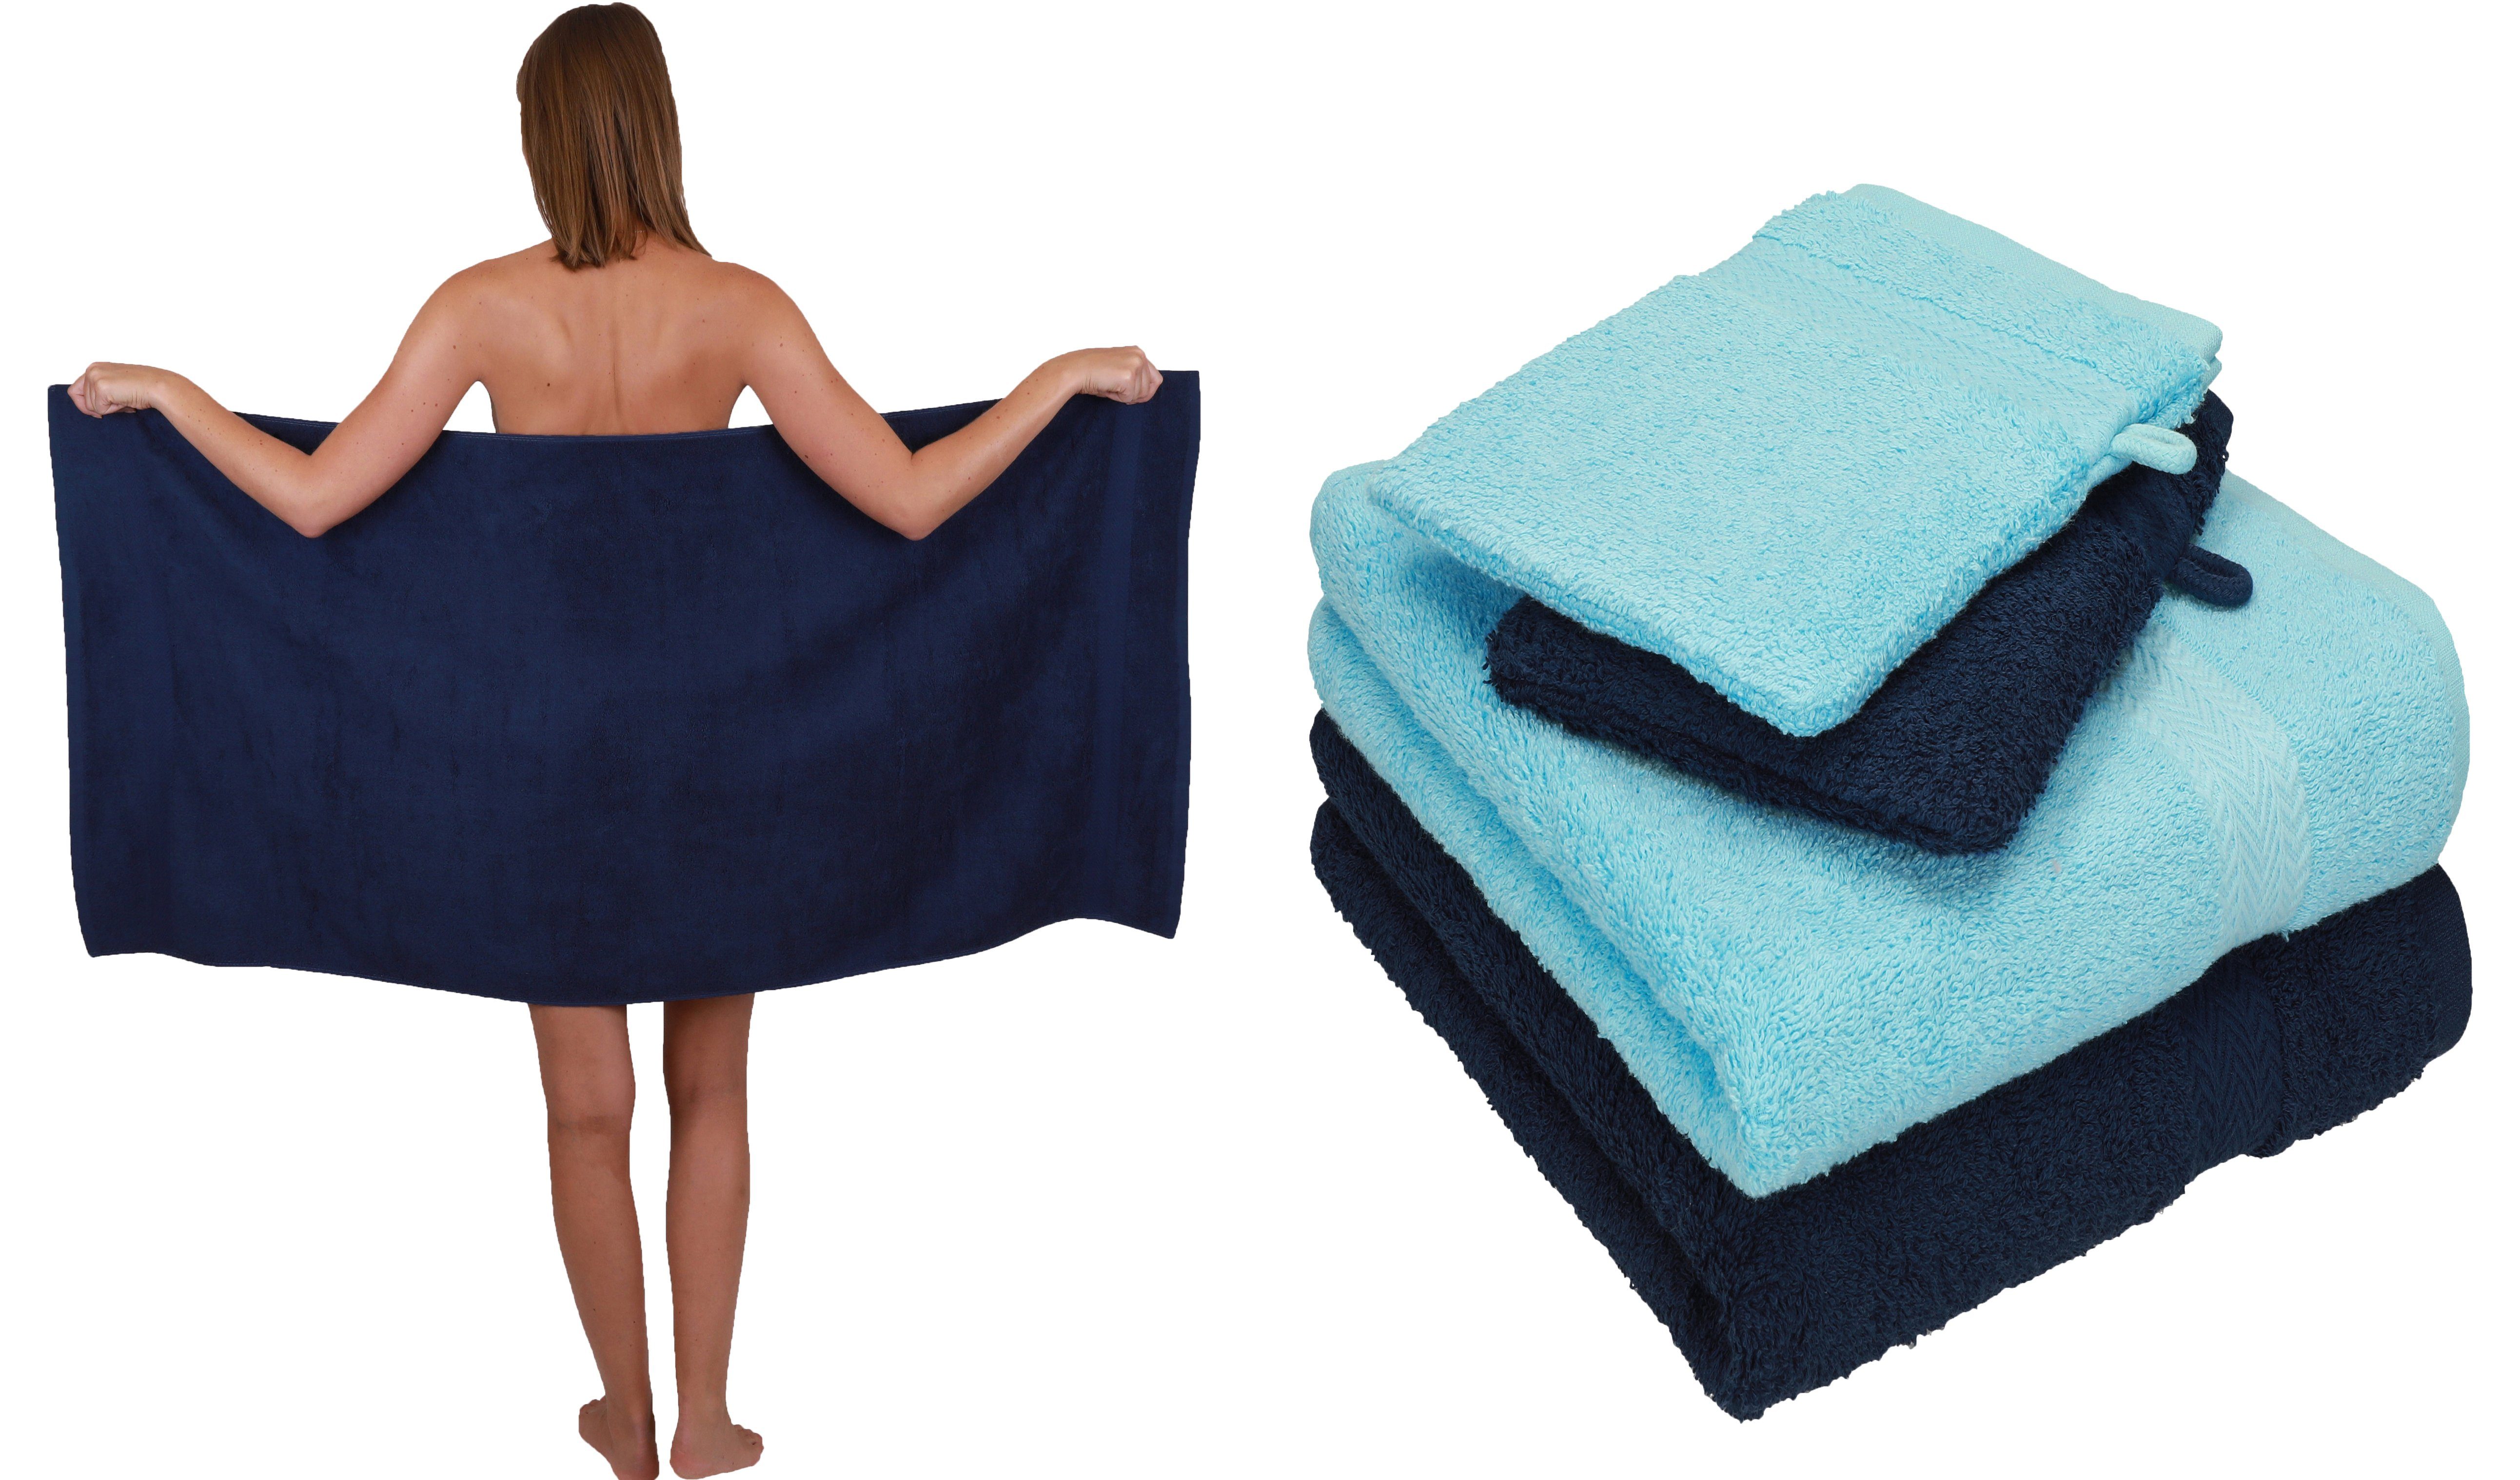 Duschtuch Baumwolle 5 Handtuch 2 1 Set dunkelblau-türkis Waschhandschuhe, 2 Baumwolle Handtücher Handtuch Set TLG. 100% Single 100% Pack Betz